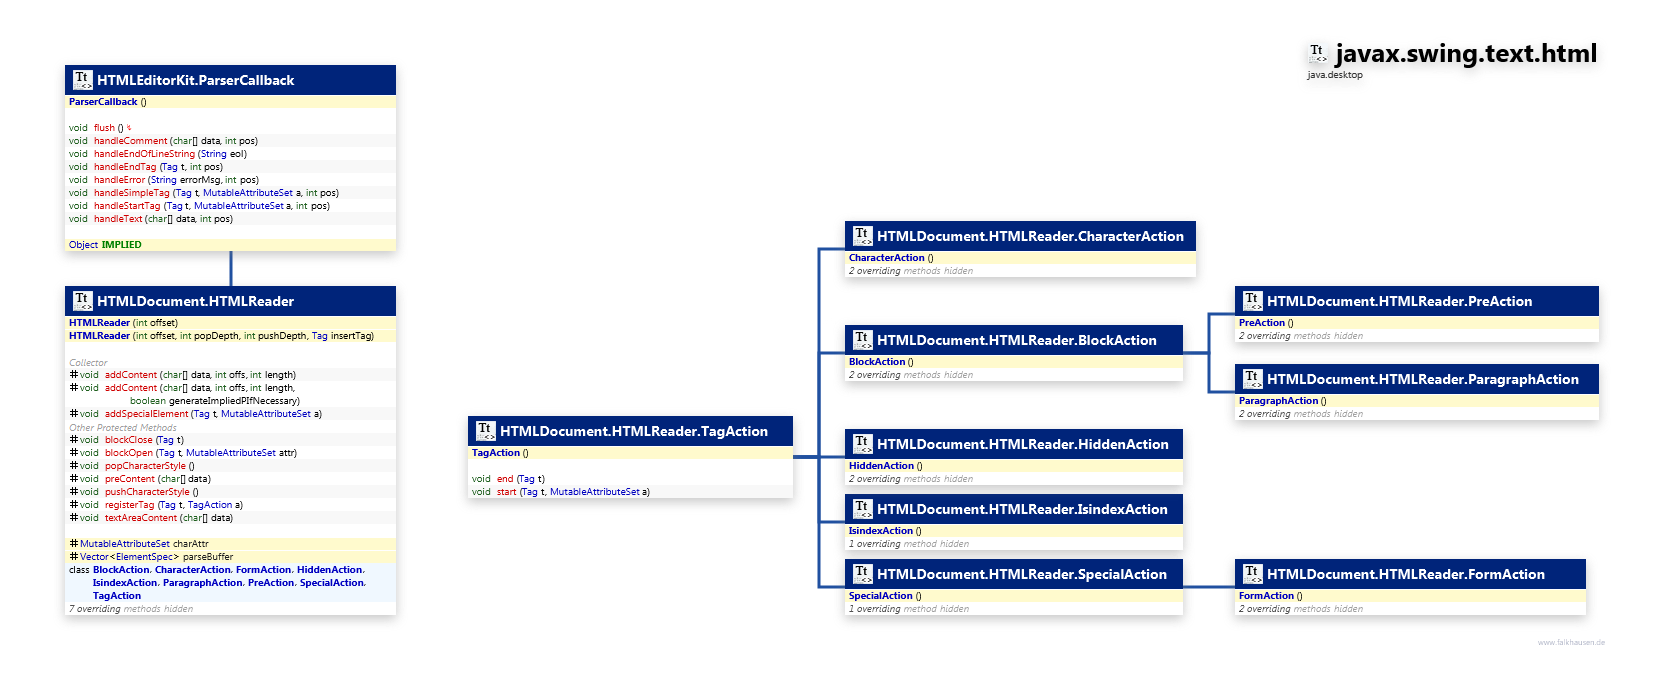 javax.swing.text.html HTMLReader class diagram and api documentation for Java 10